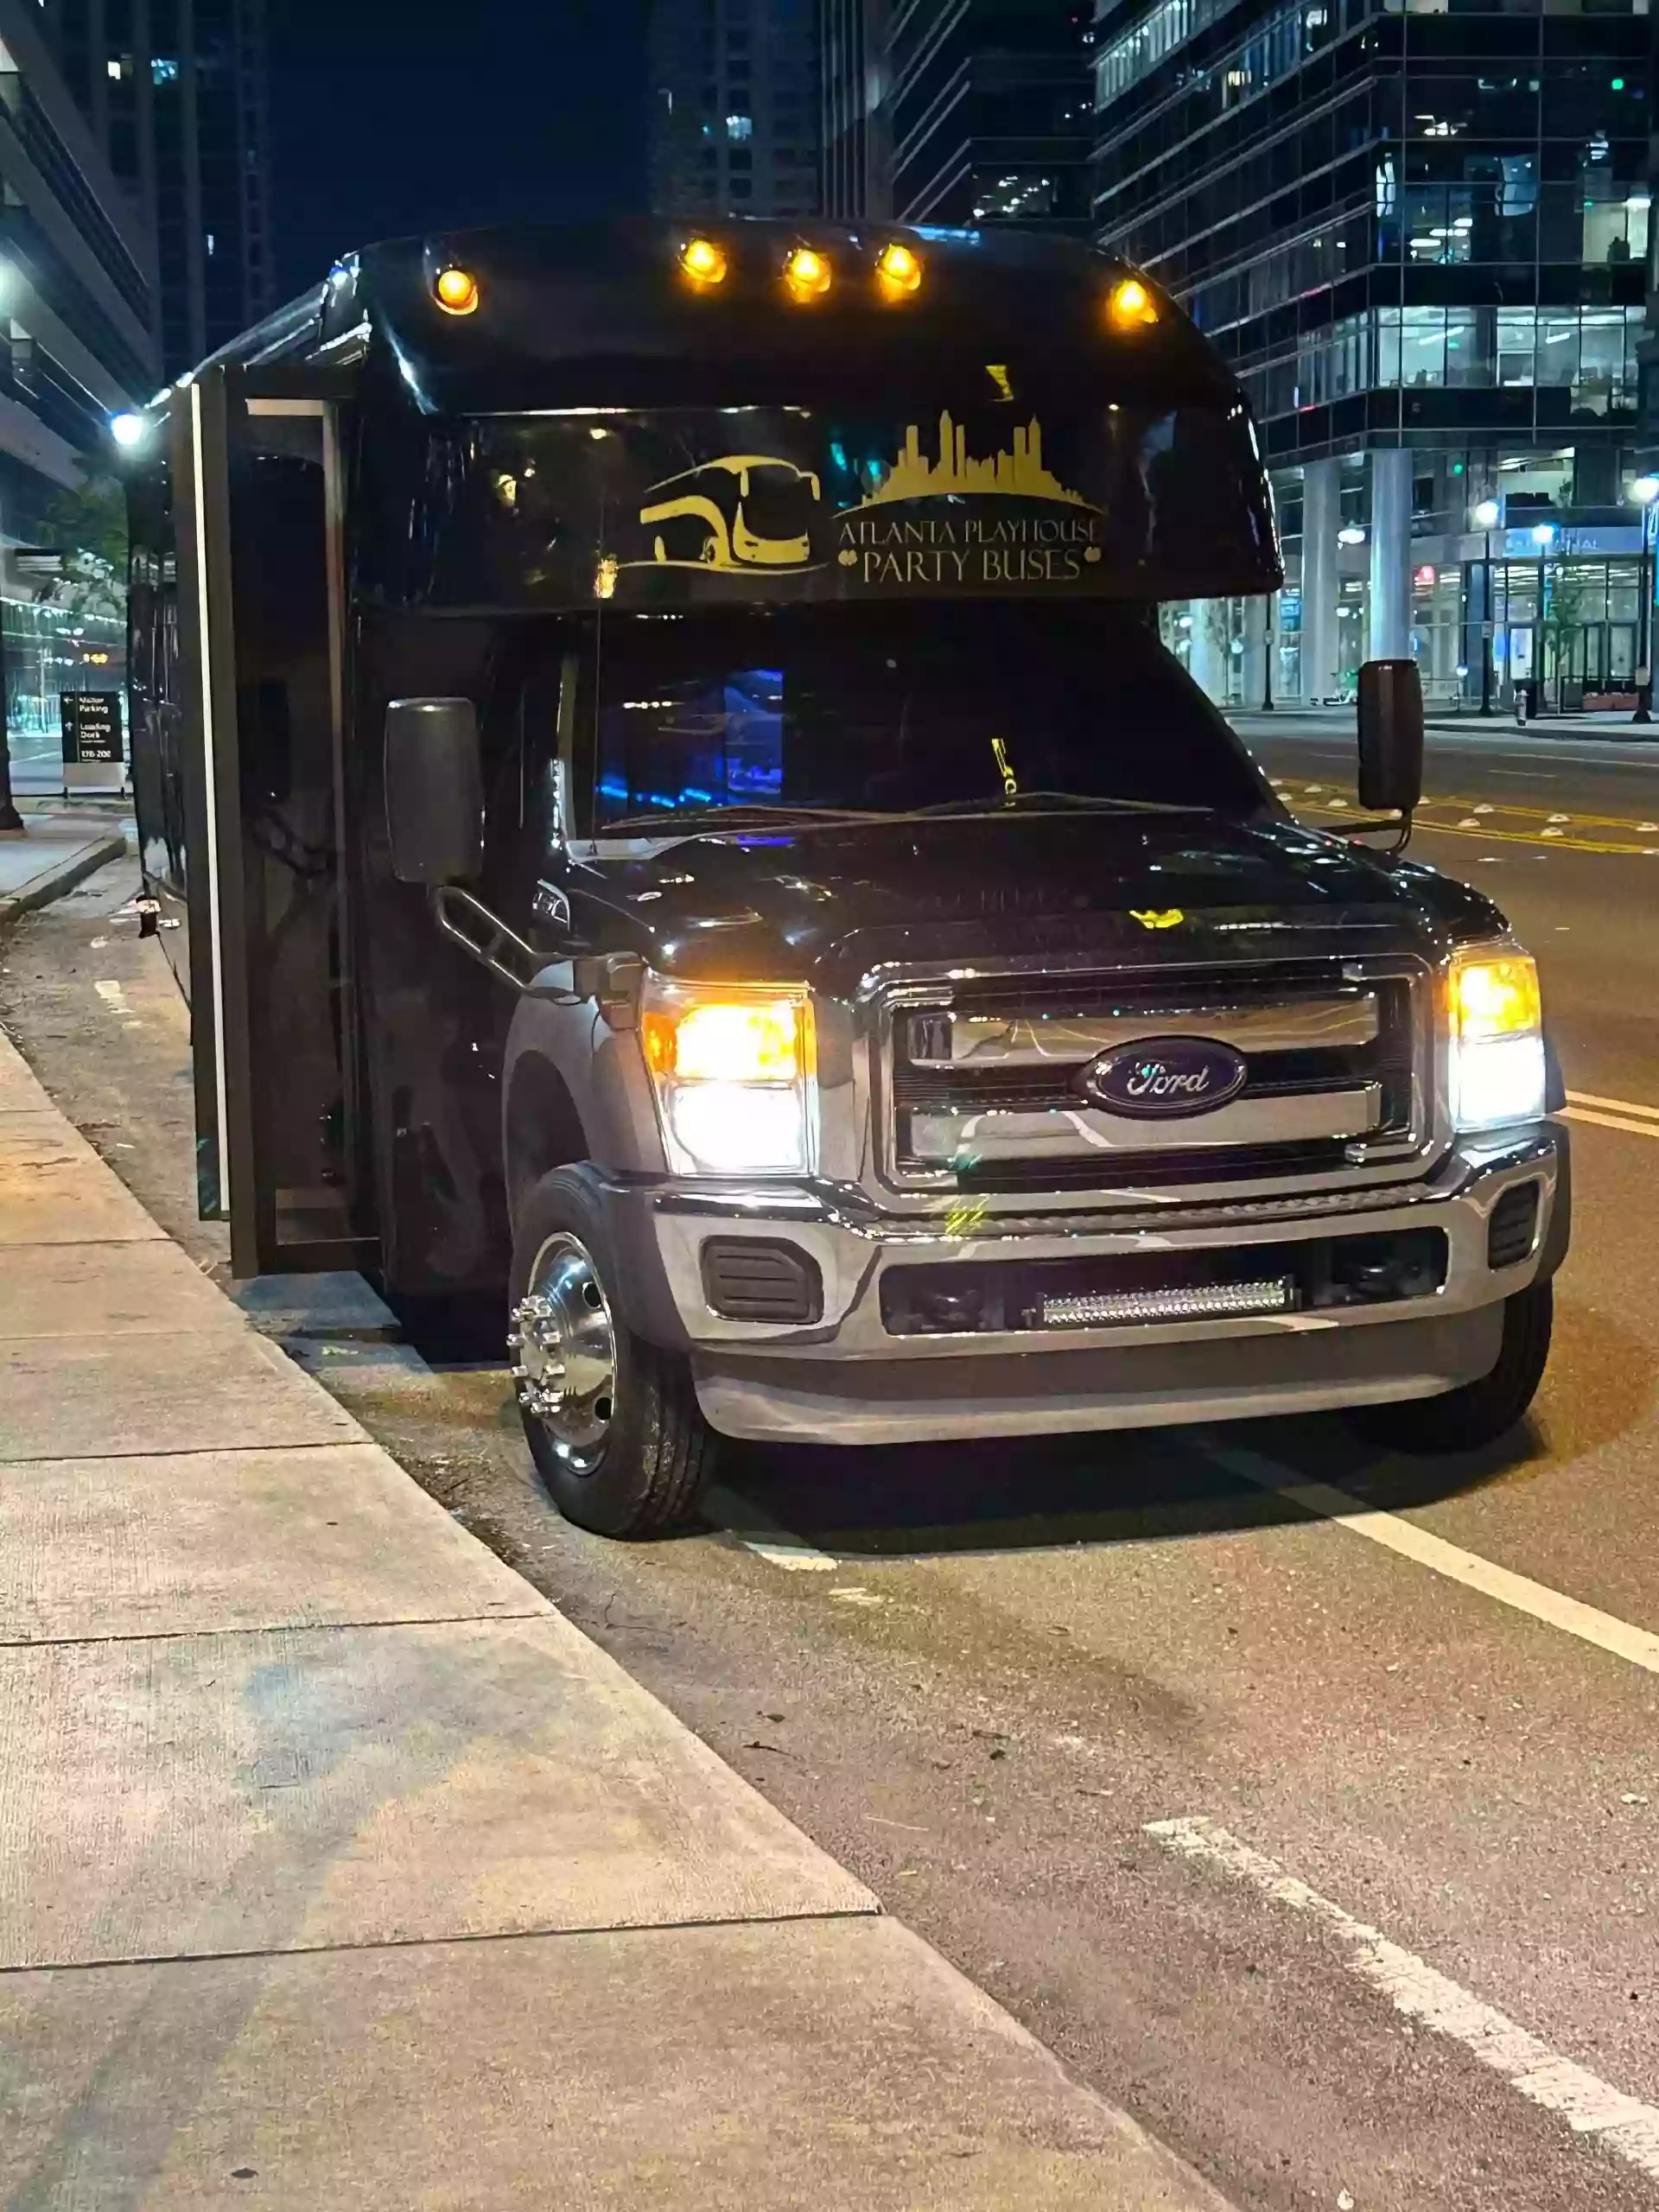 Atlanta Playhouse Party Bus Rental Transportation